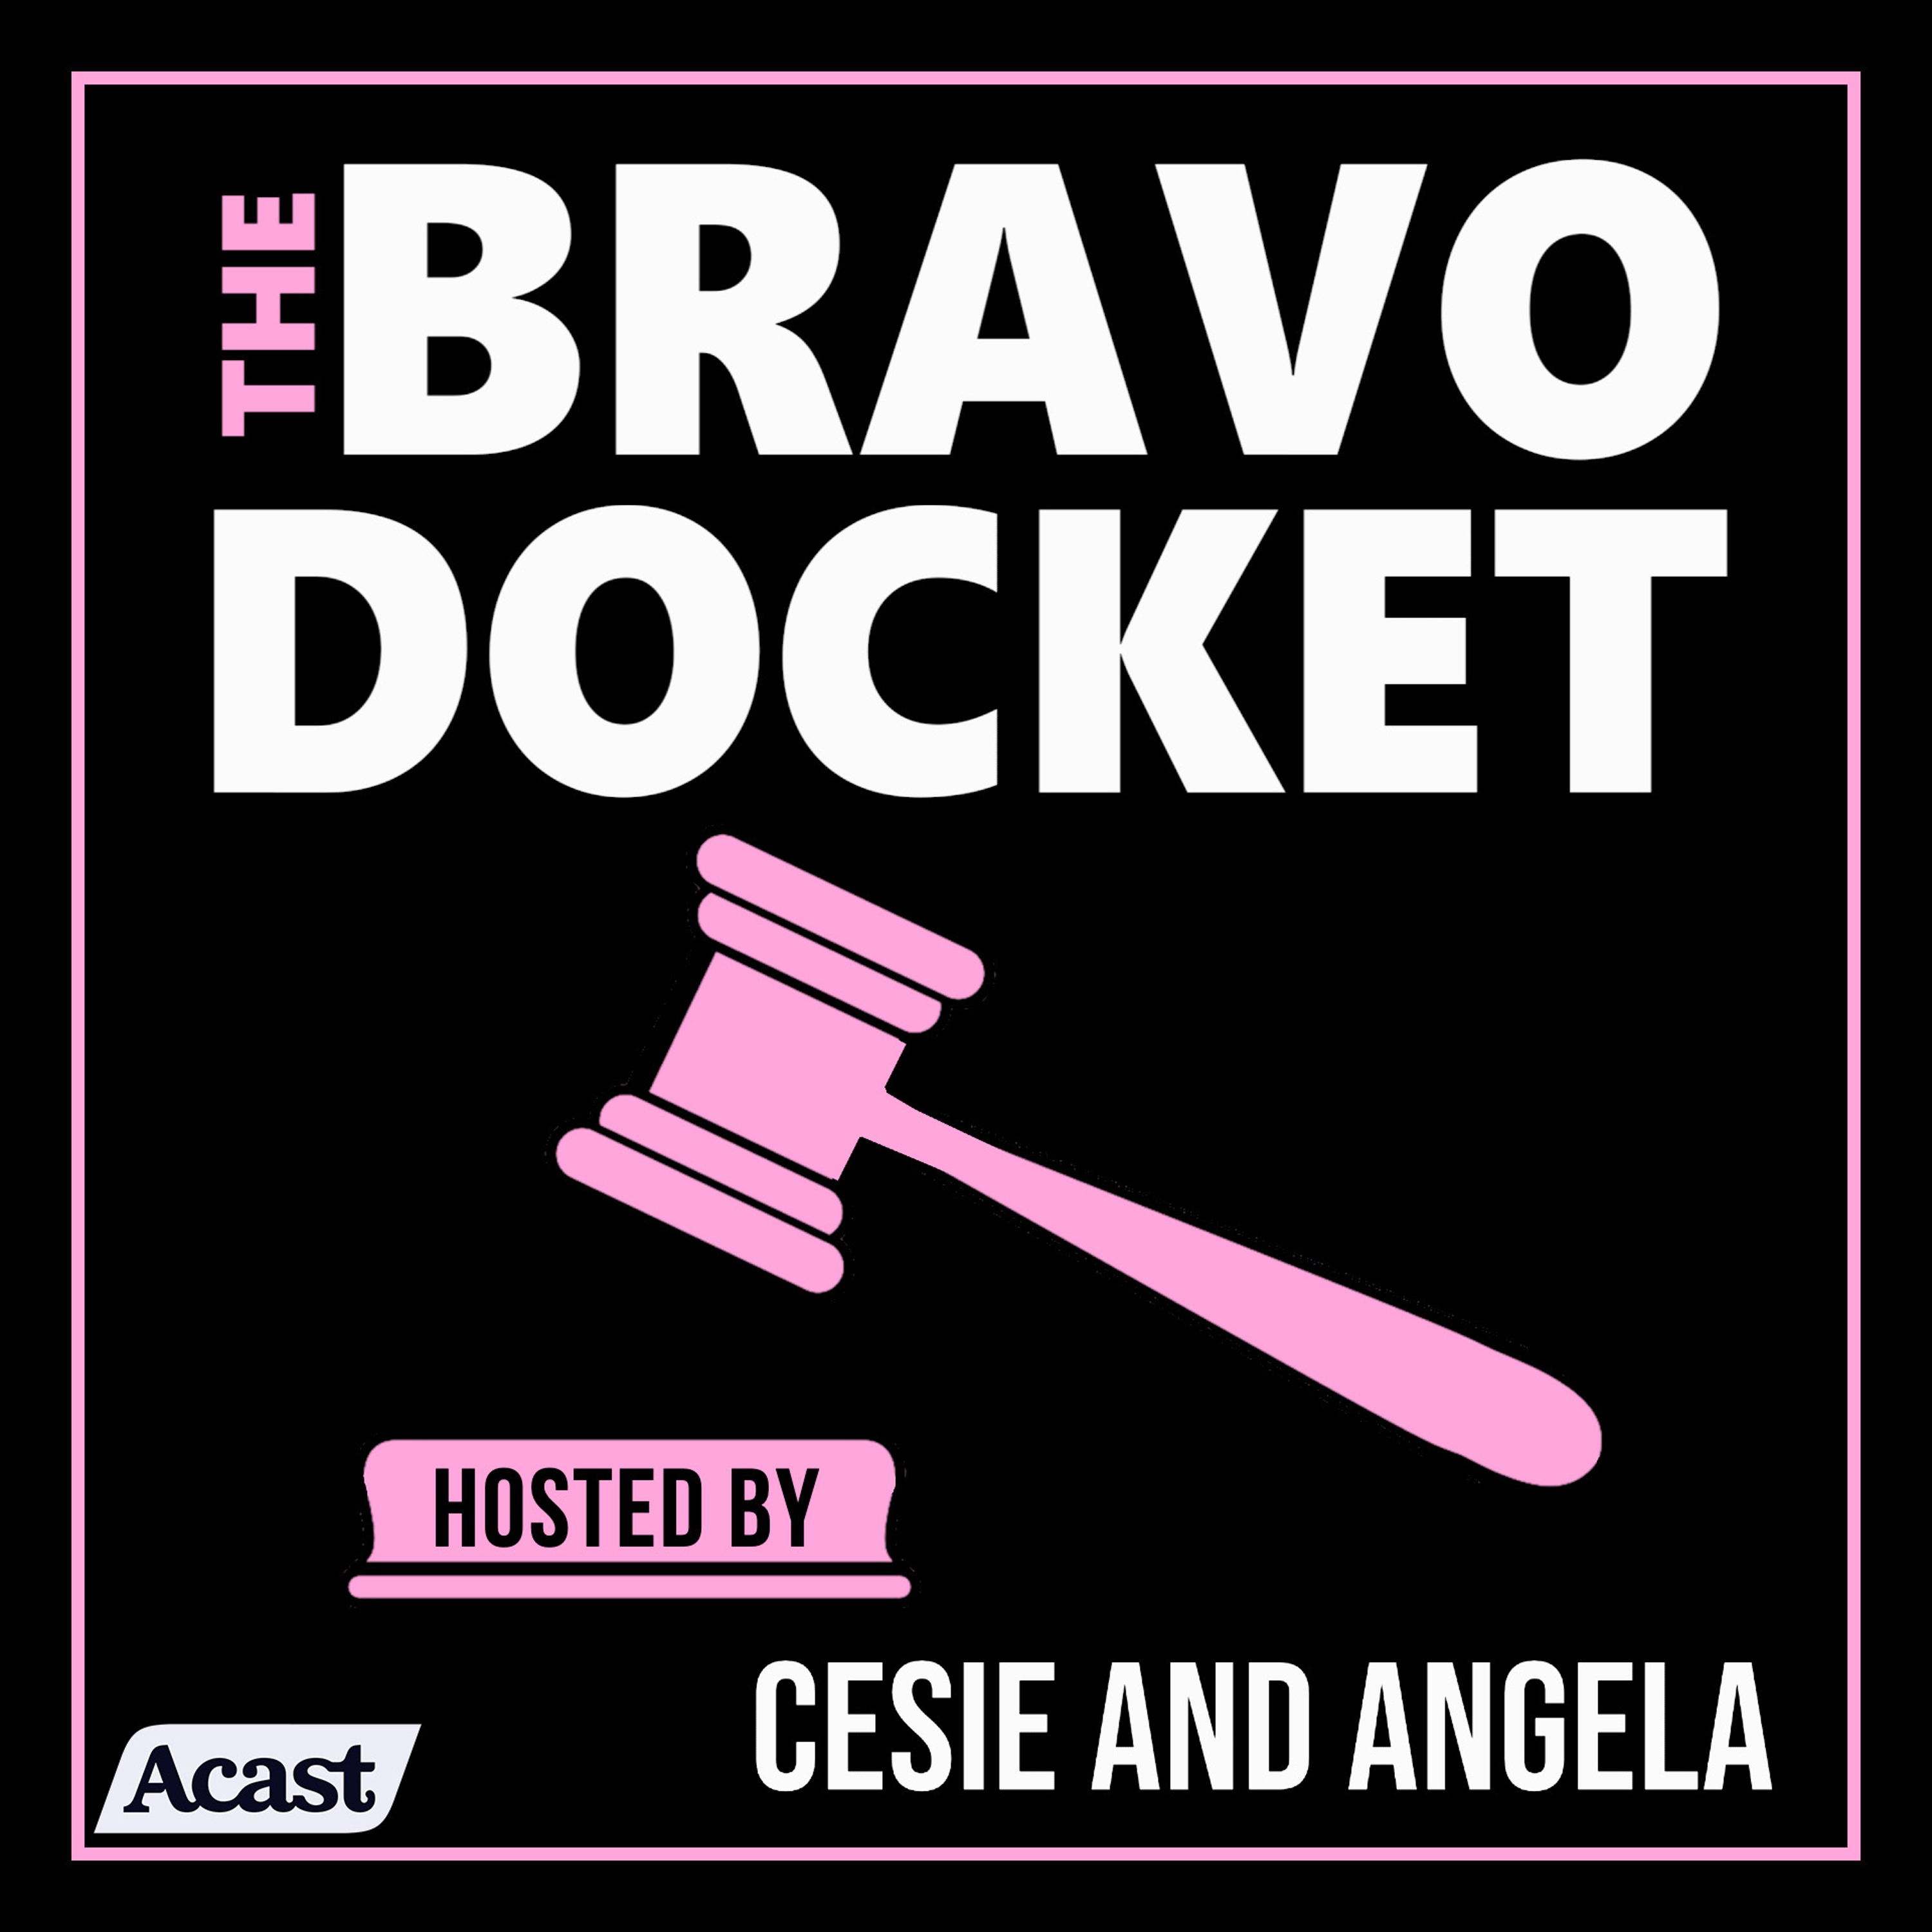 The Bravo Docket:Cesie and Angela